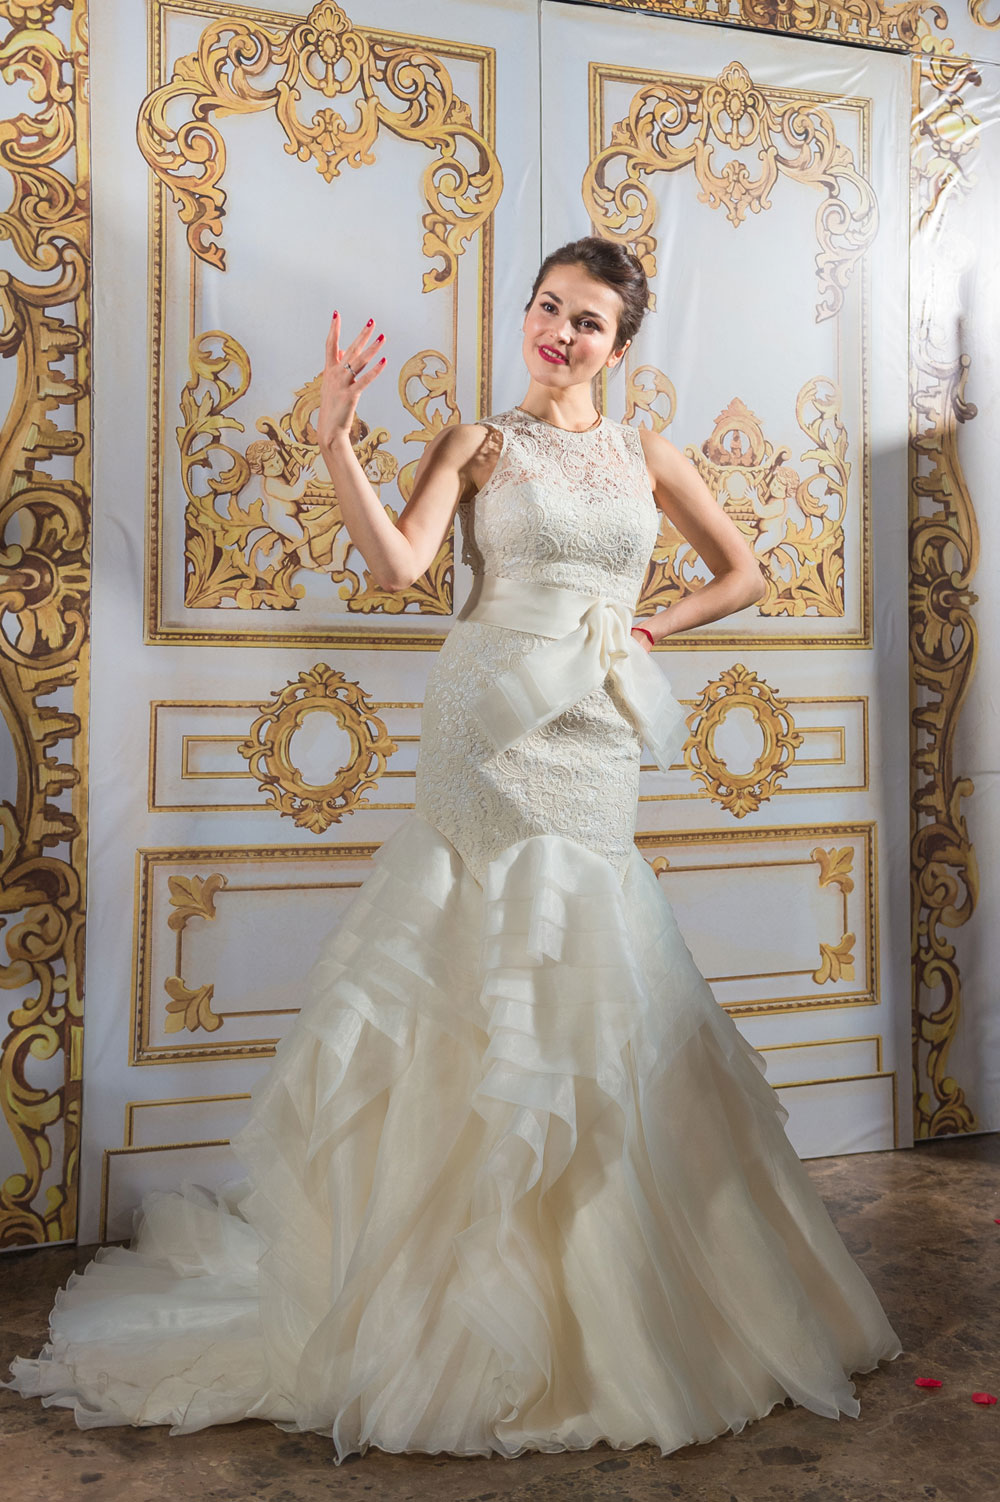 Sati Kazanova in a wedding gown by Vanilla.